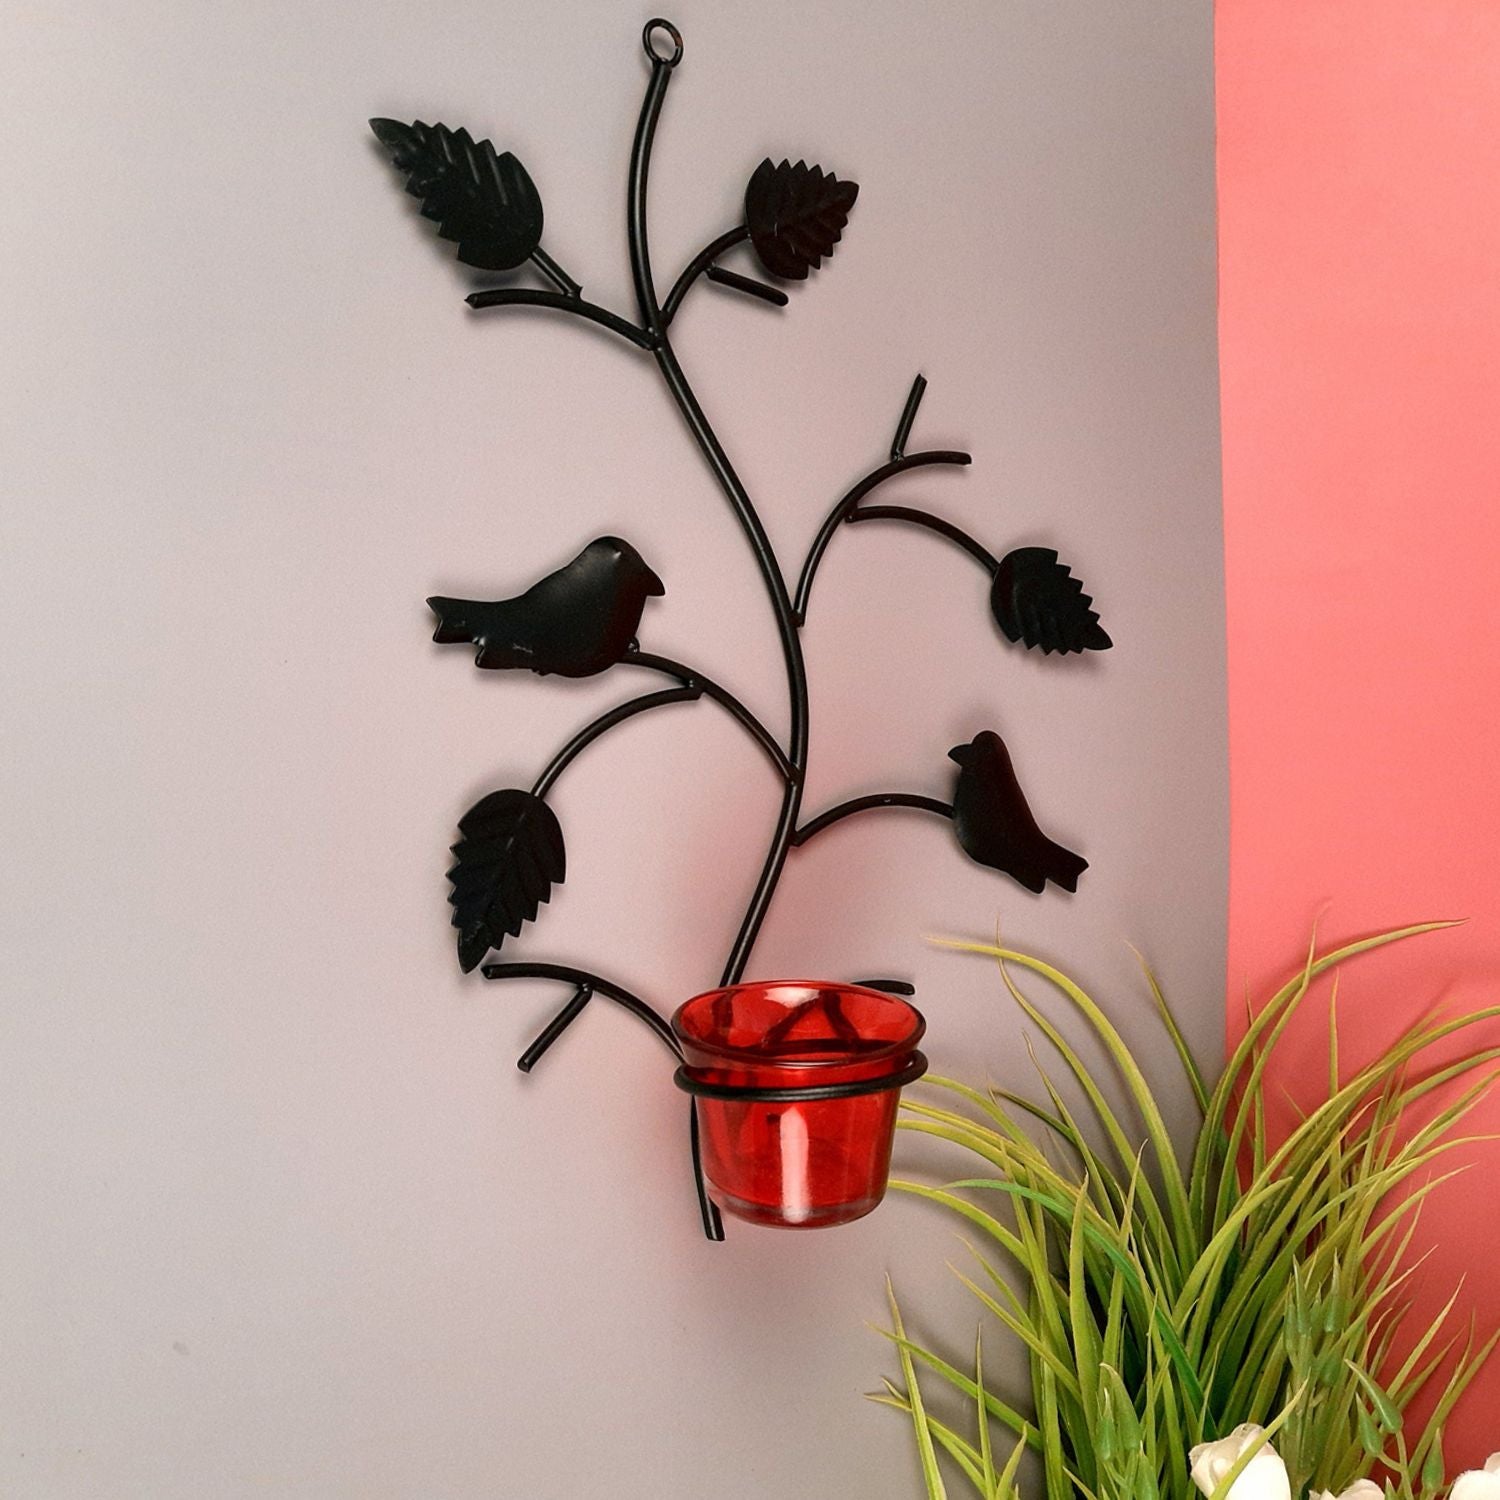 Tea Light Holder Wall Hanging | T Light Candle Stand With 1 Tea Light Holder Cup | Votive Holder - For Home, Wall Decor, Living Room, Hallway & Gifts - 13 Inch - Apkamart